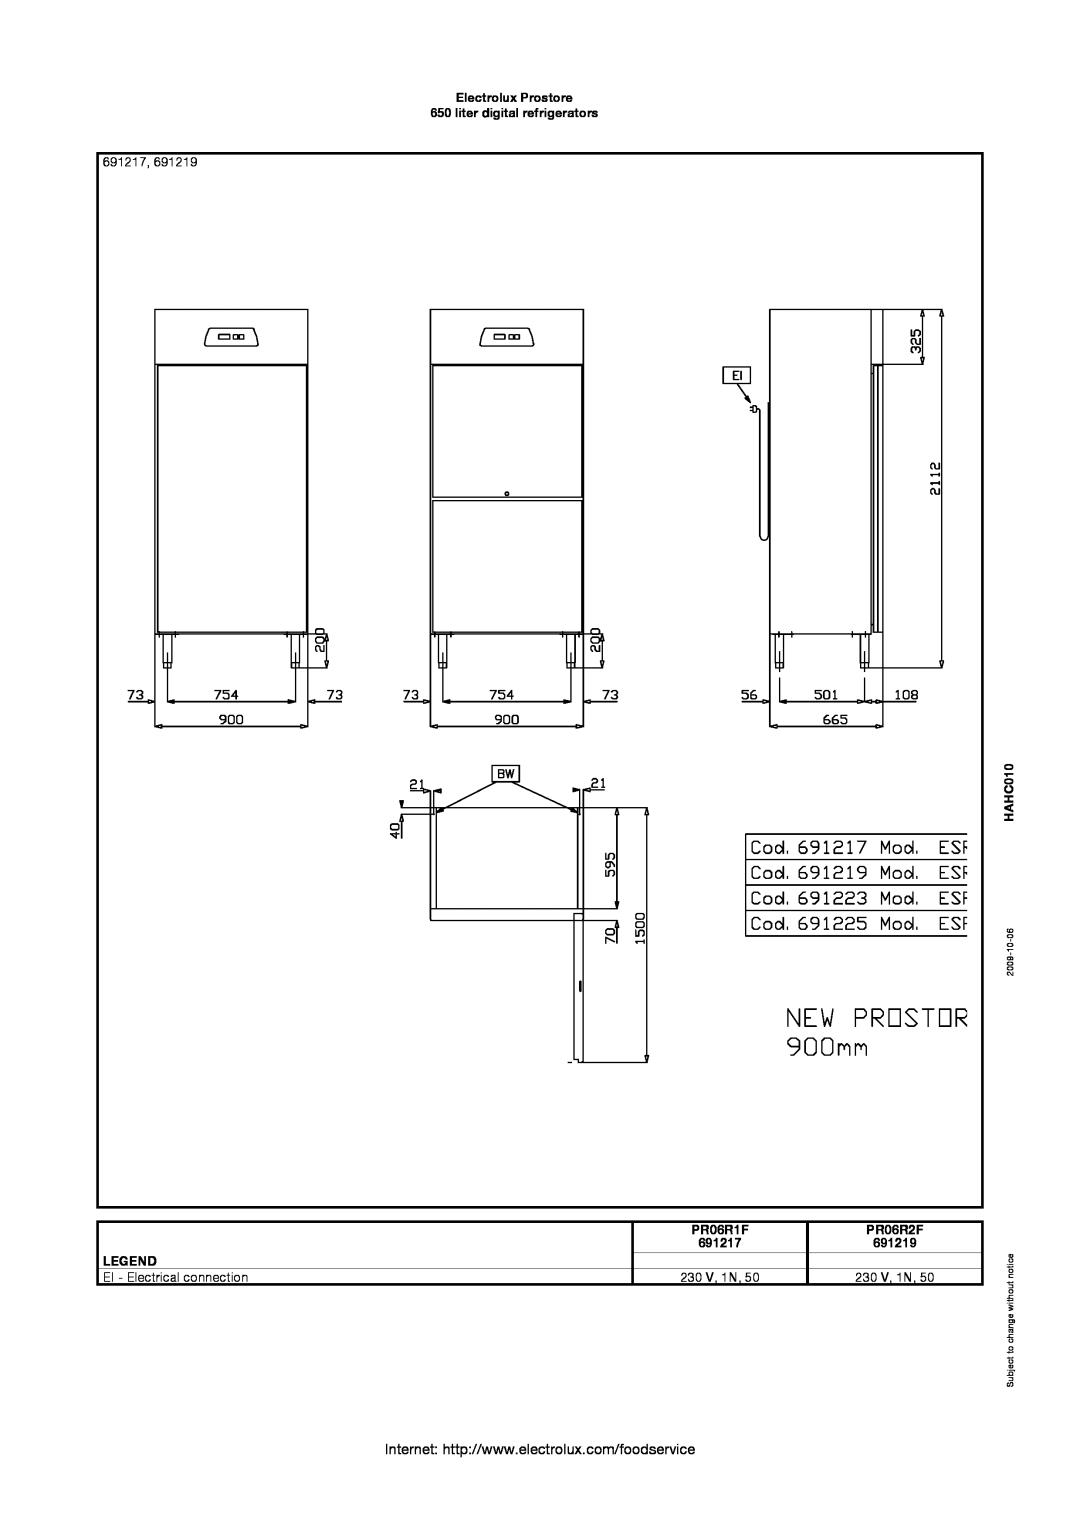 Electrolux 691219 manual 691217, Electrolux Prostore 650 liter digital refrigerators, HAHC010, PR06R1F, PR06R2F, 2009-10-06 